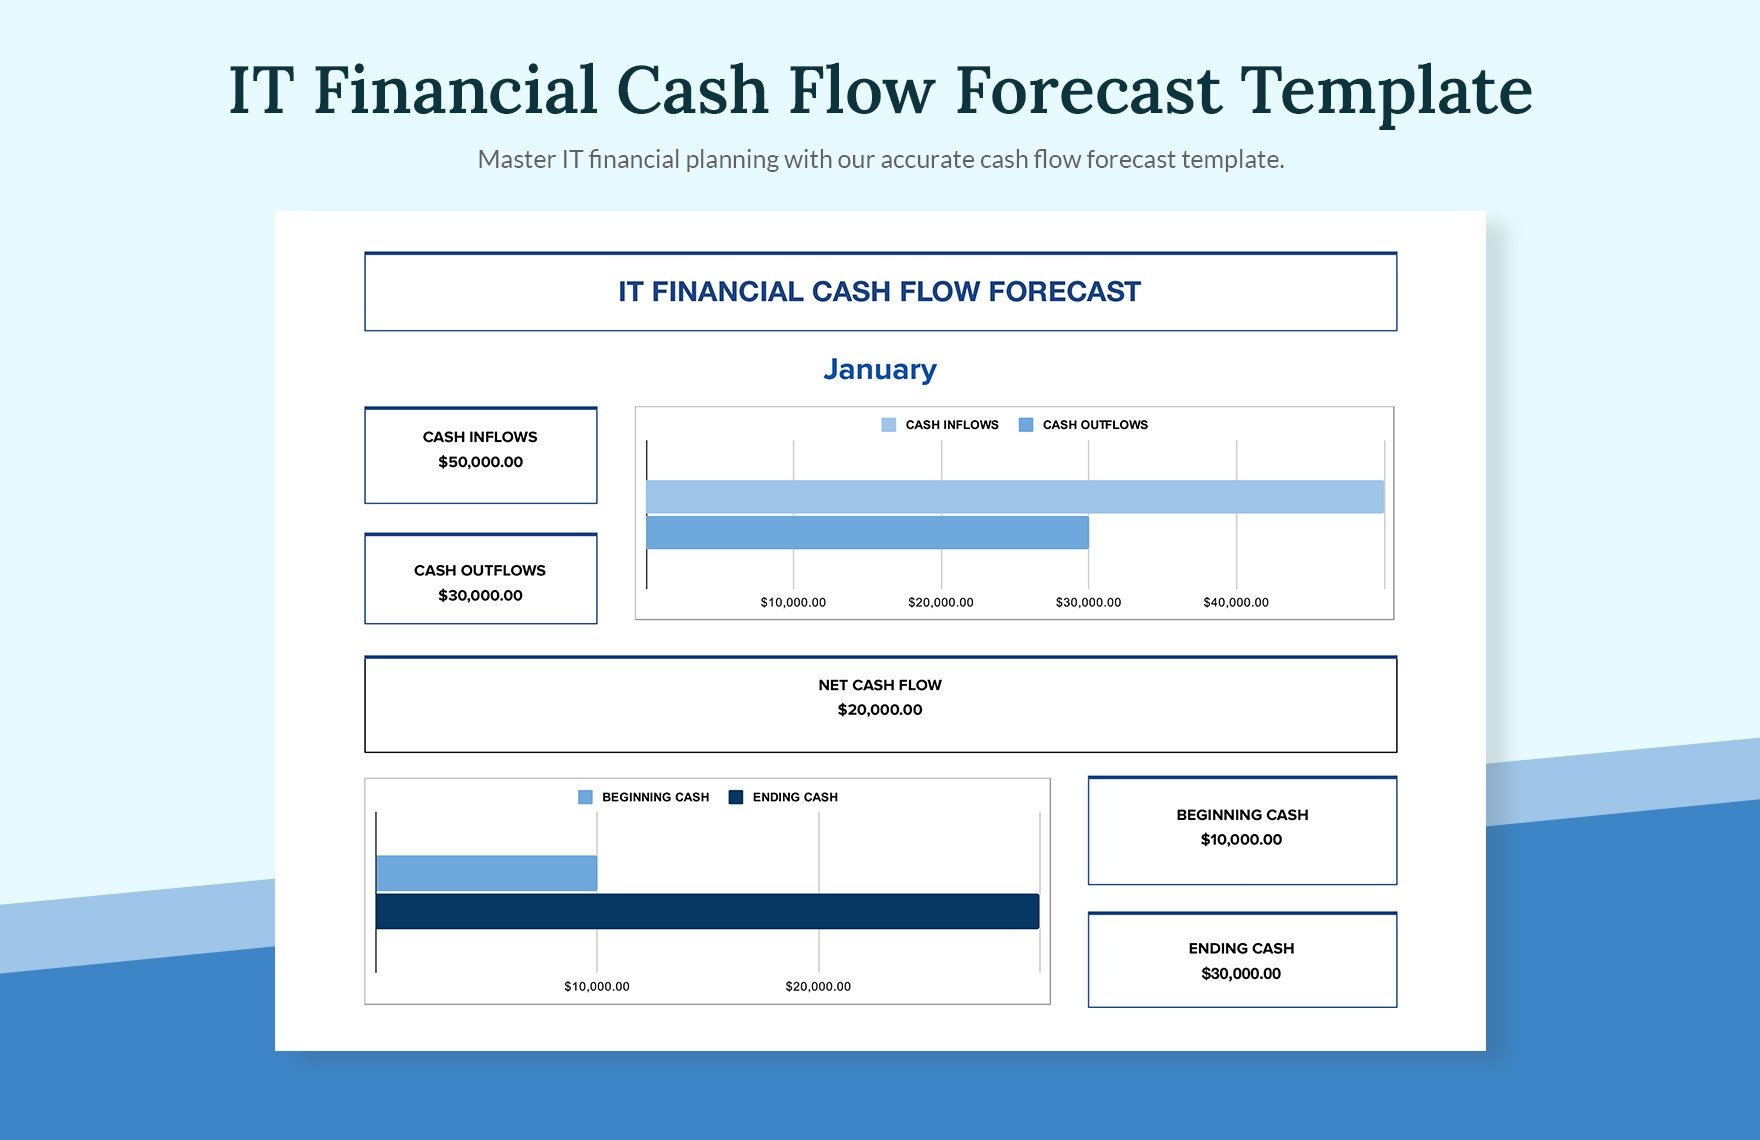 IT Financial Cash Flow Forecast Template